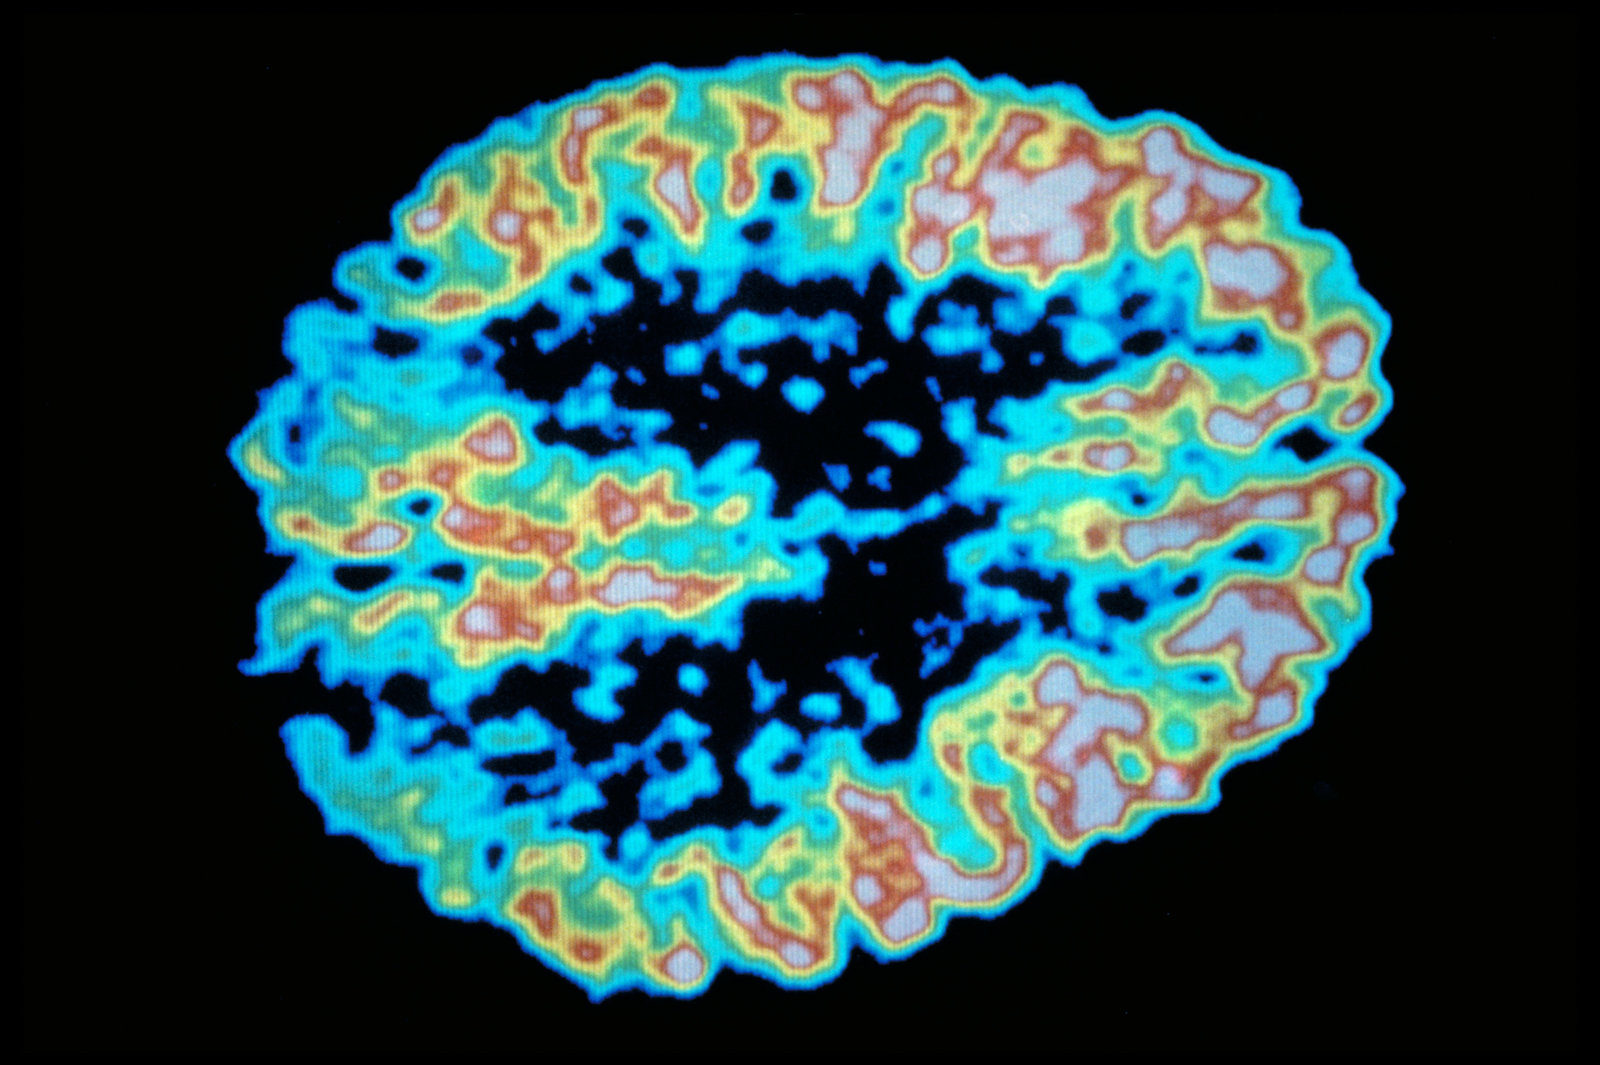 PET scan sugar brain